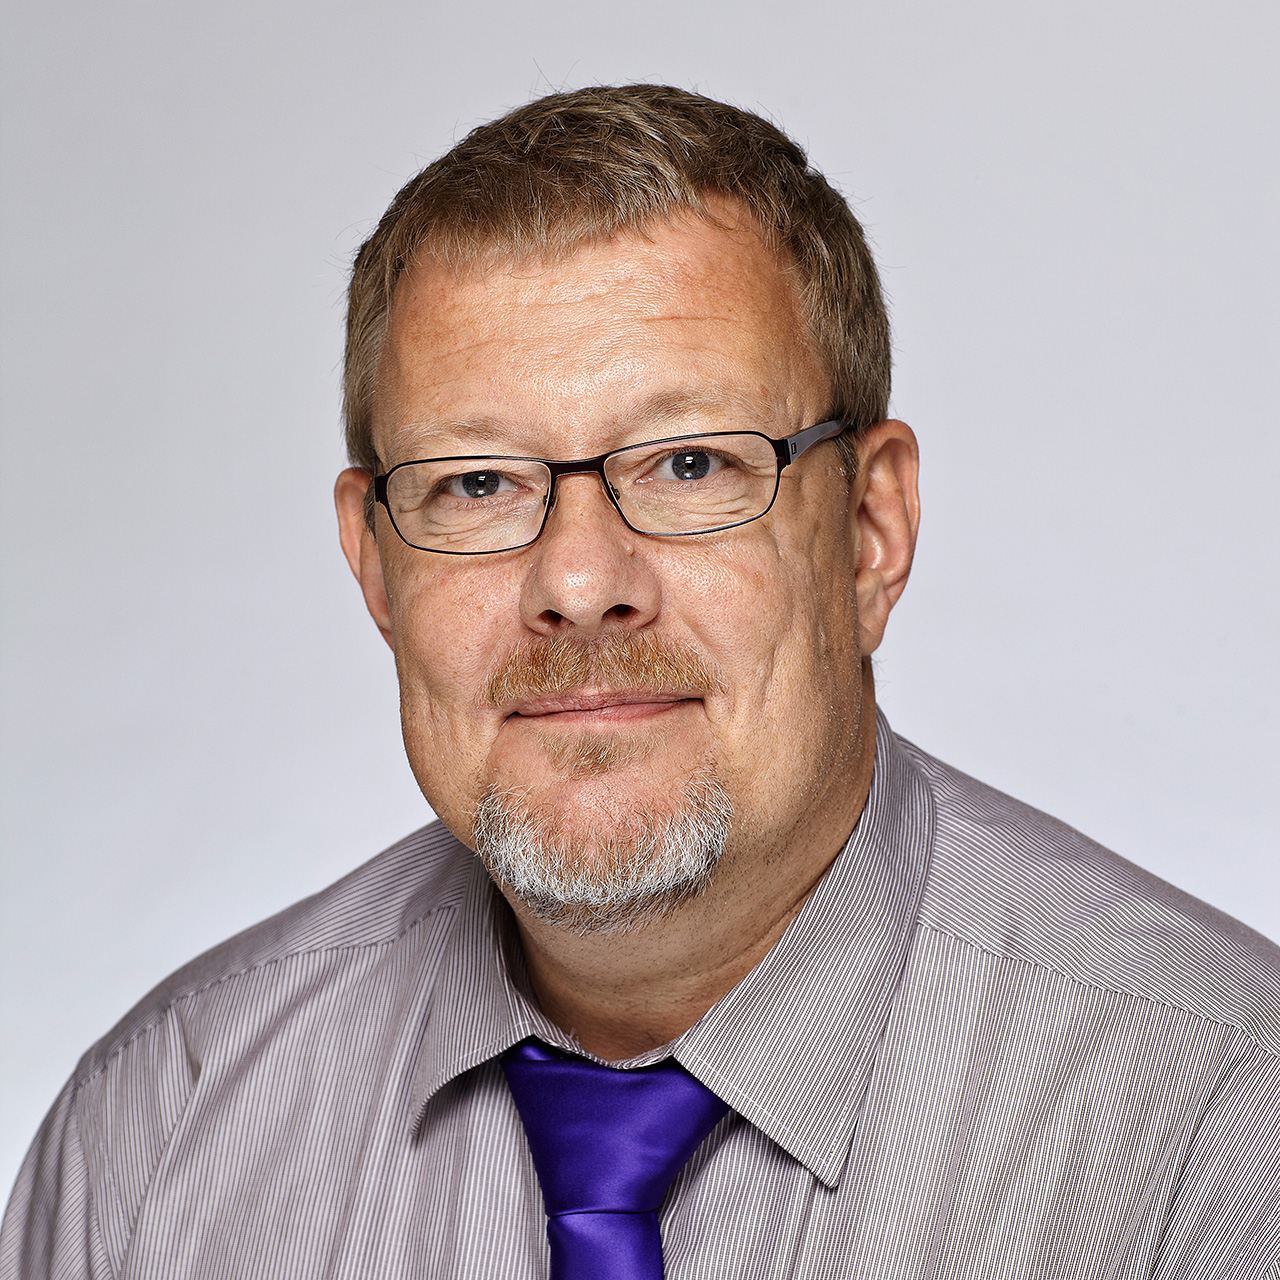 Jürgen Rockstroh, MD, PhD